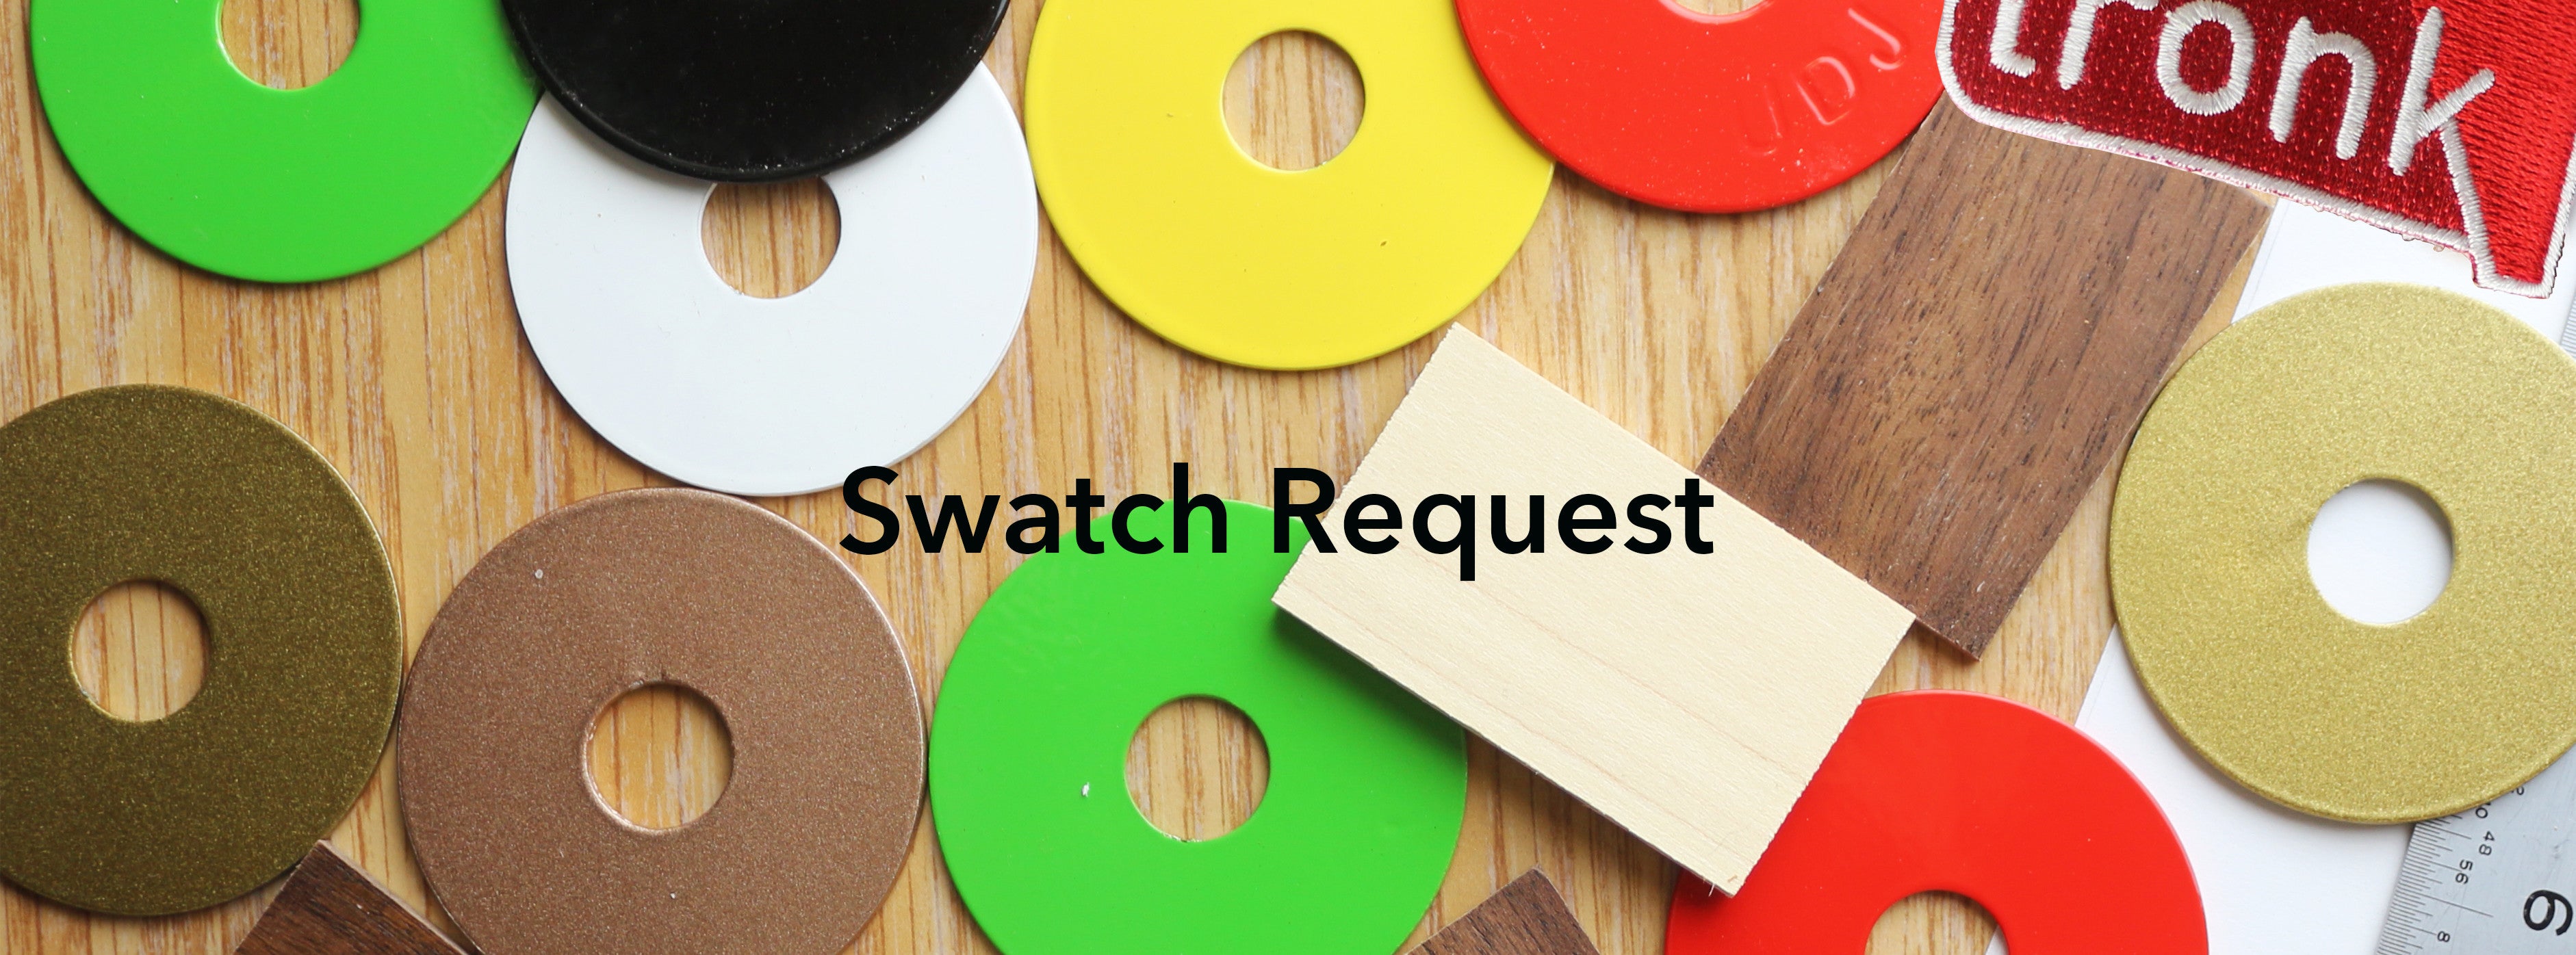 Swatch Request